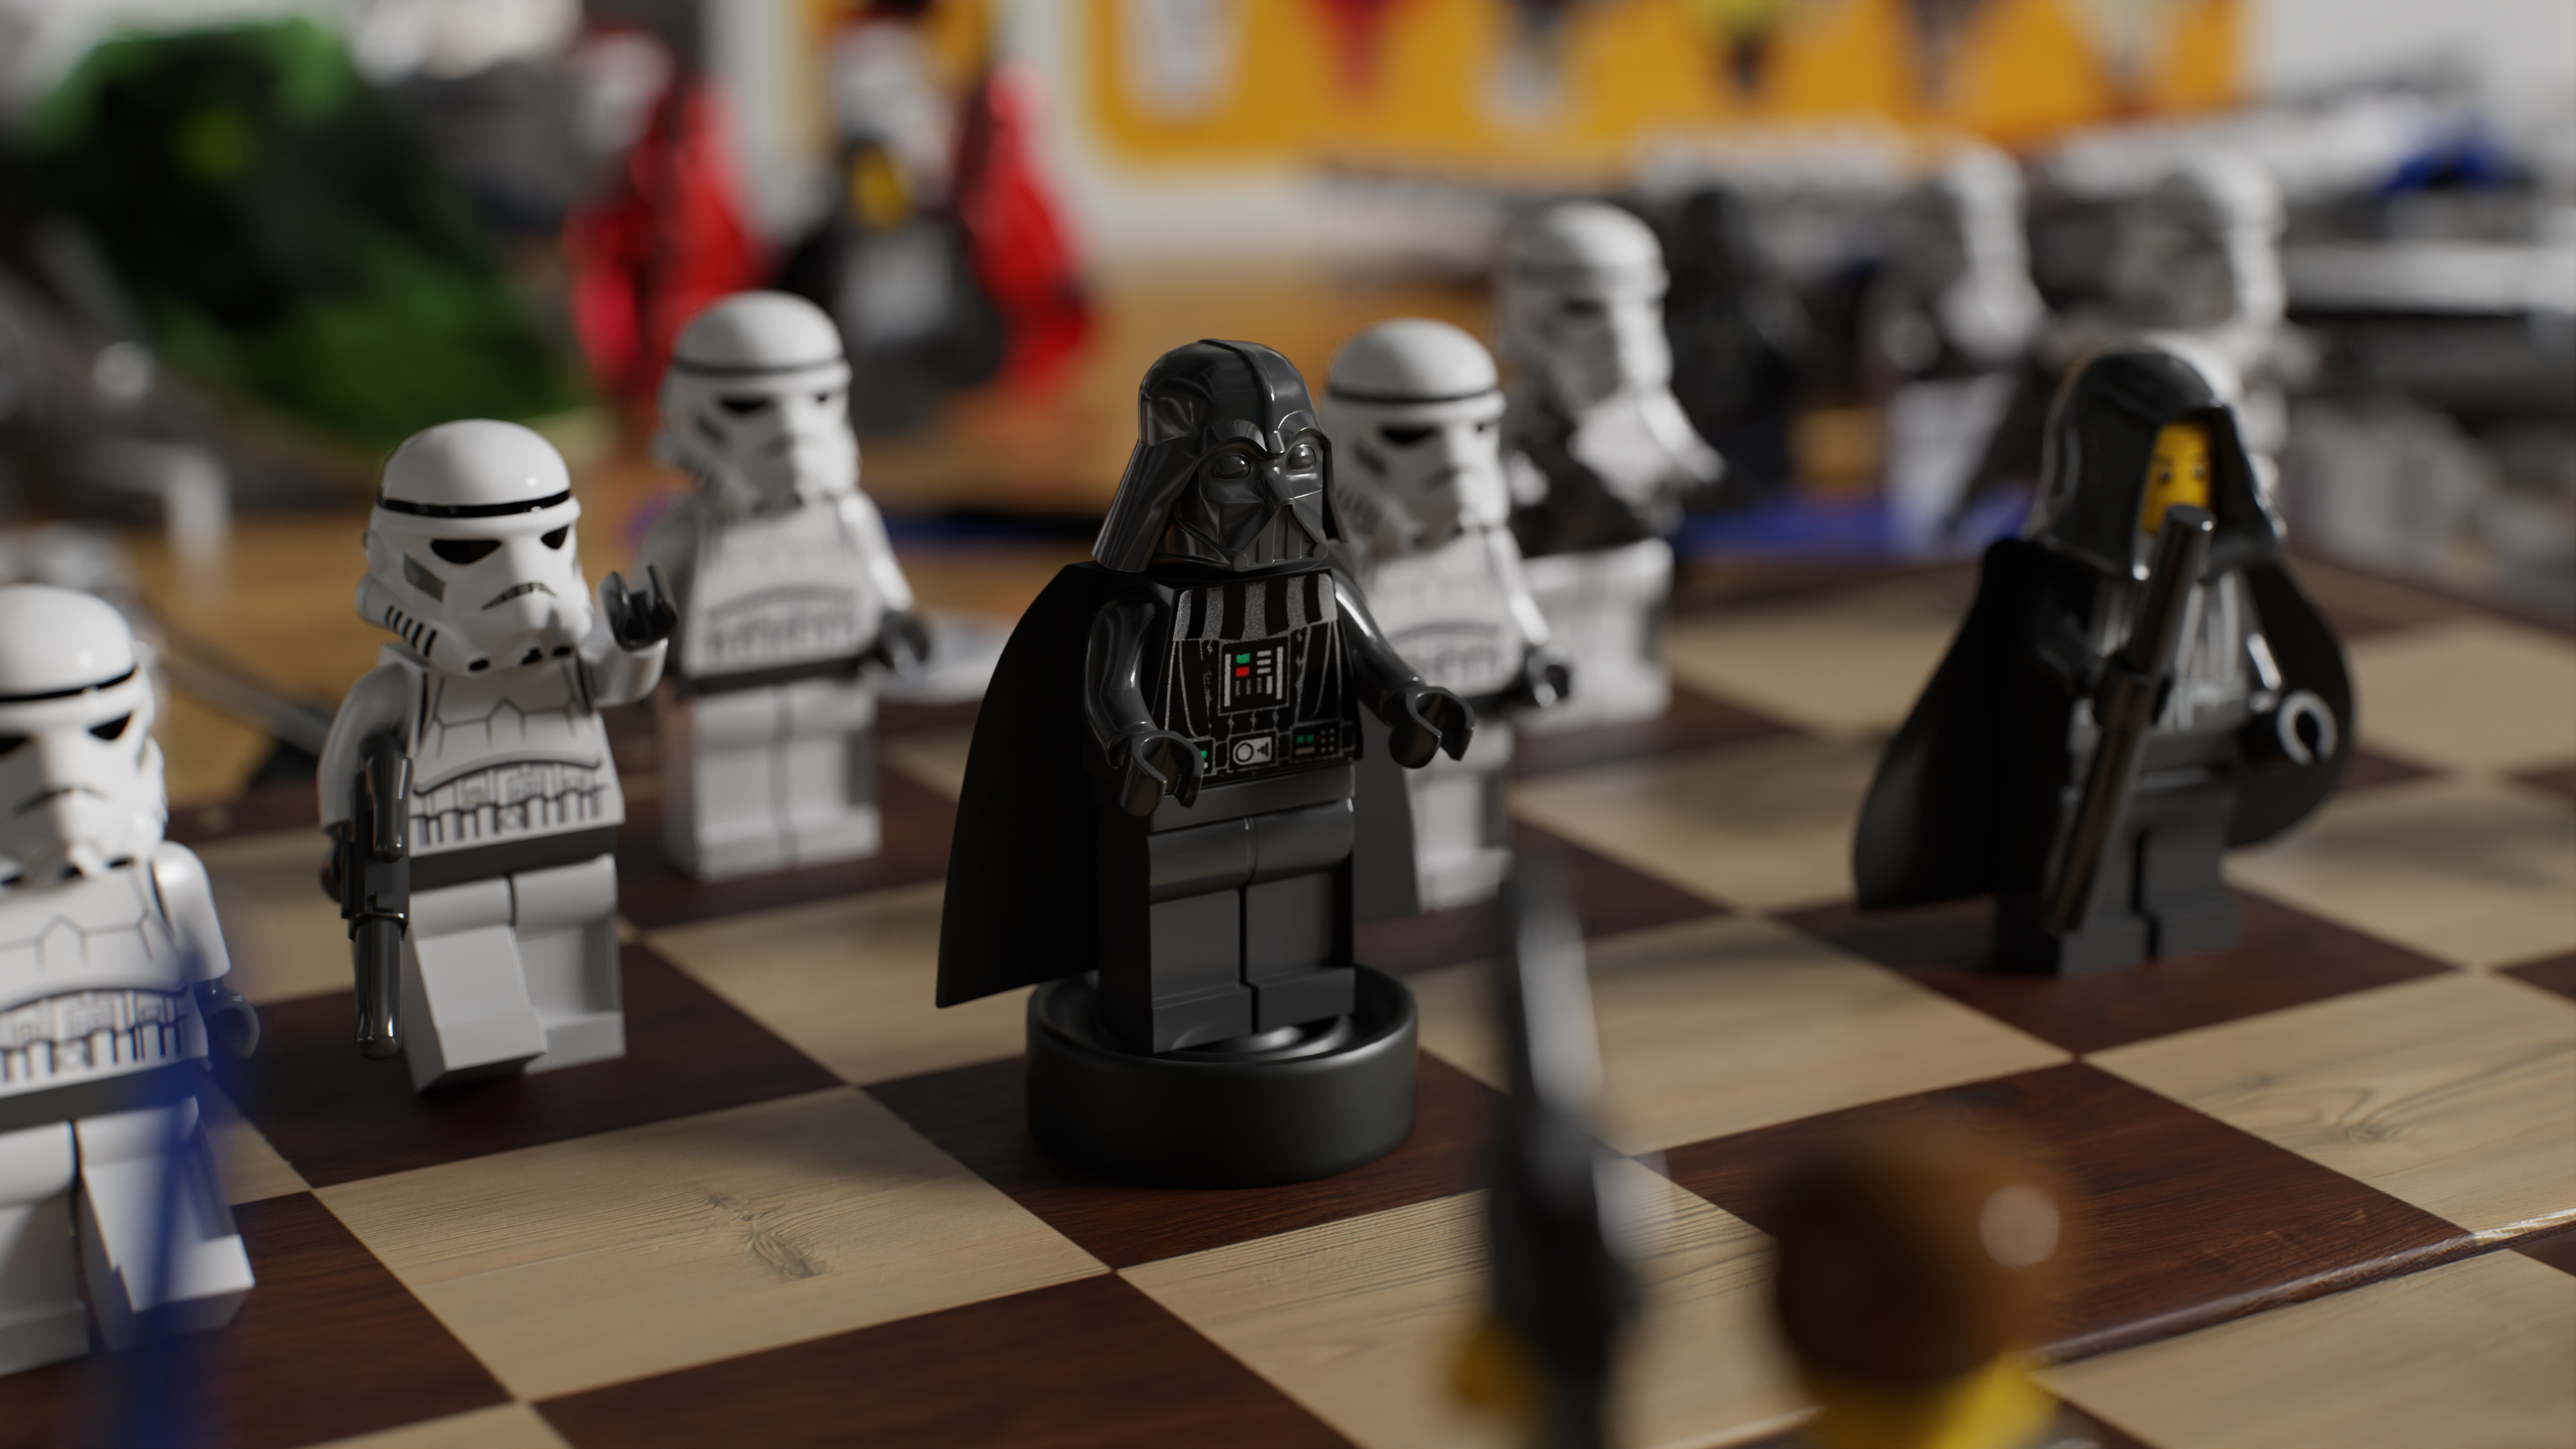 Star Wars Toys Chess Board Games LEGO Darth Vader Star Wars Villains 3840x2160